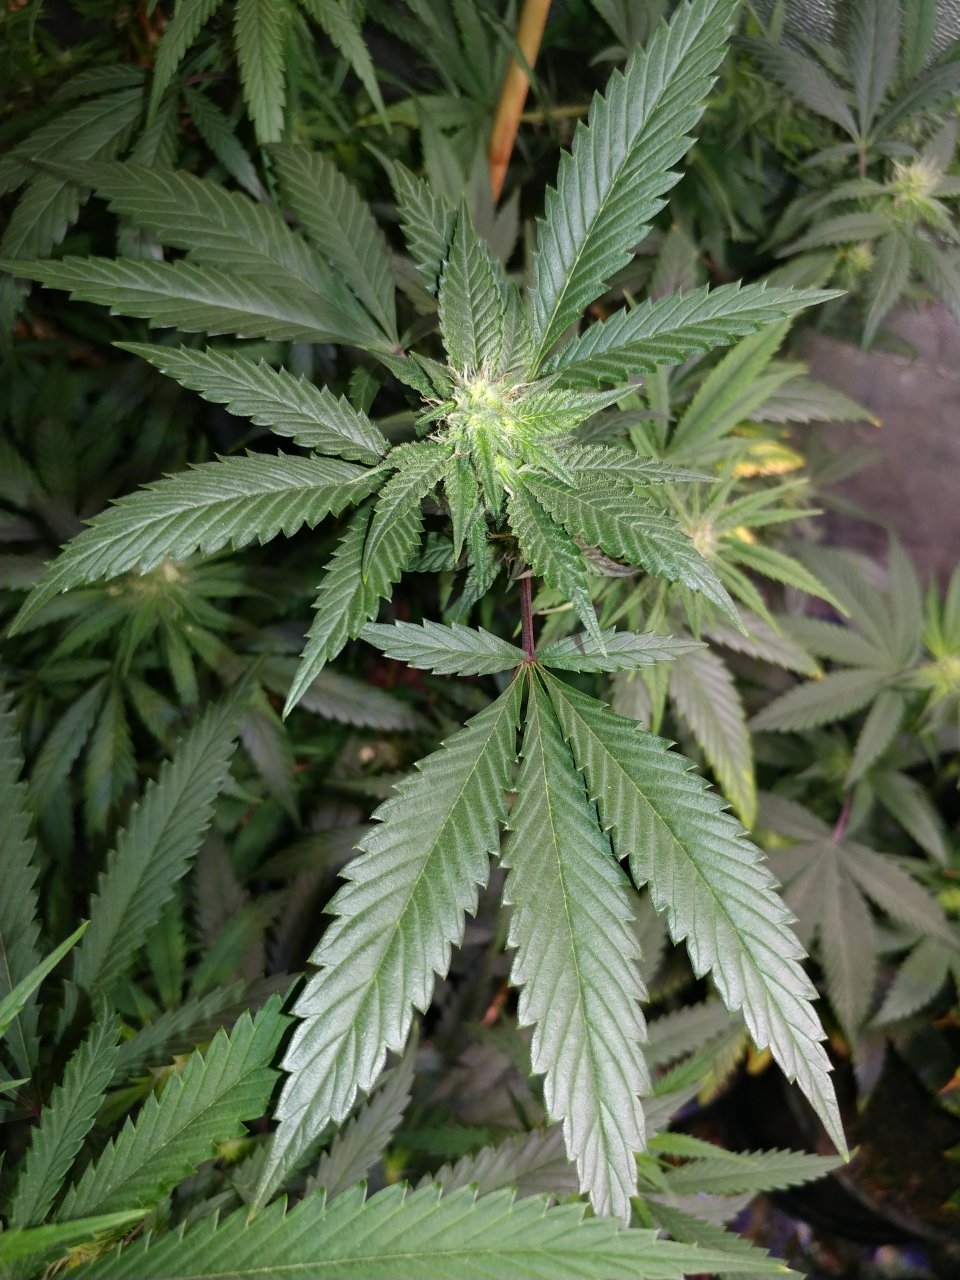 2018 Icemud Harlequin x Pine Tar Kush 79 Xmas Bud seed project indoor cannabis grow in soil